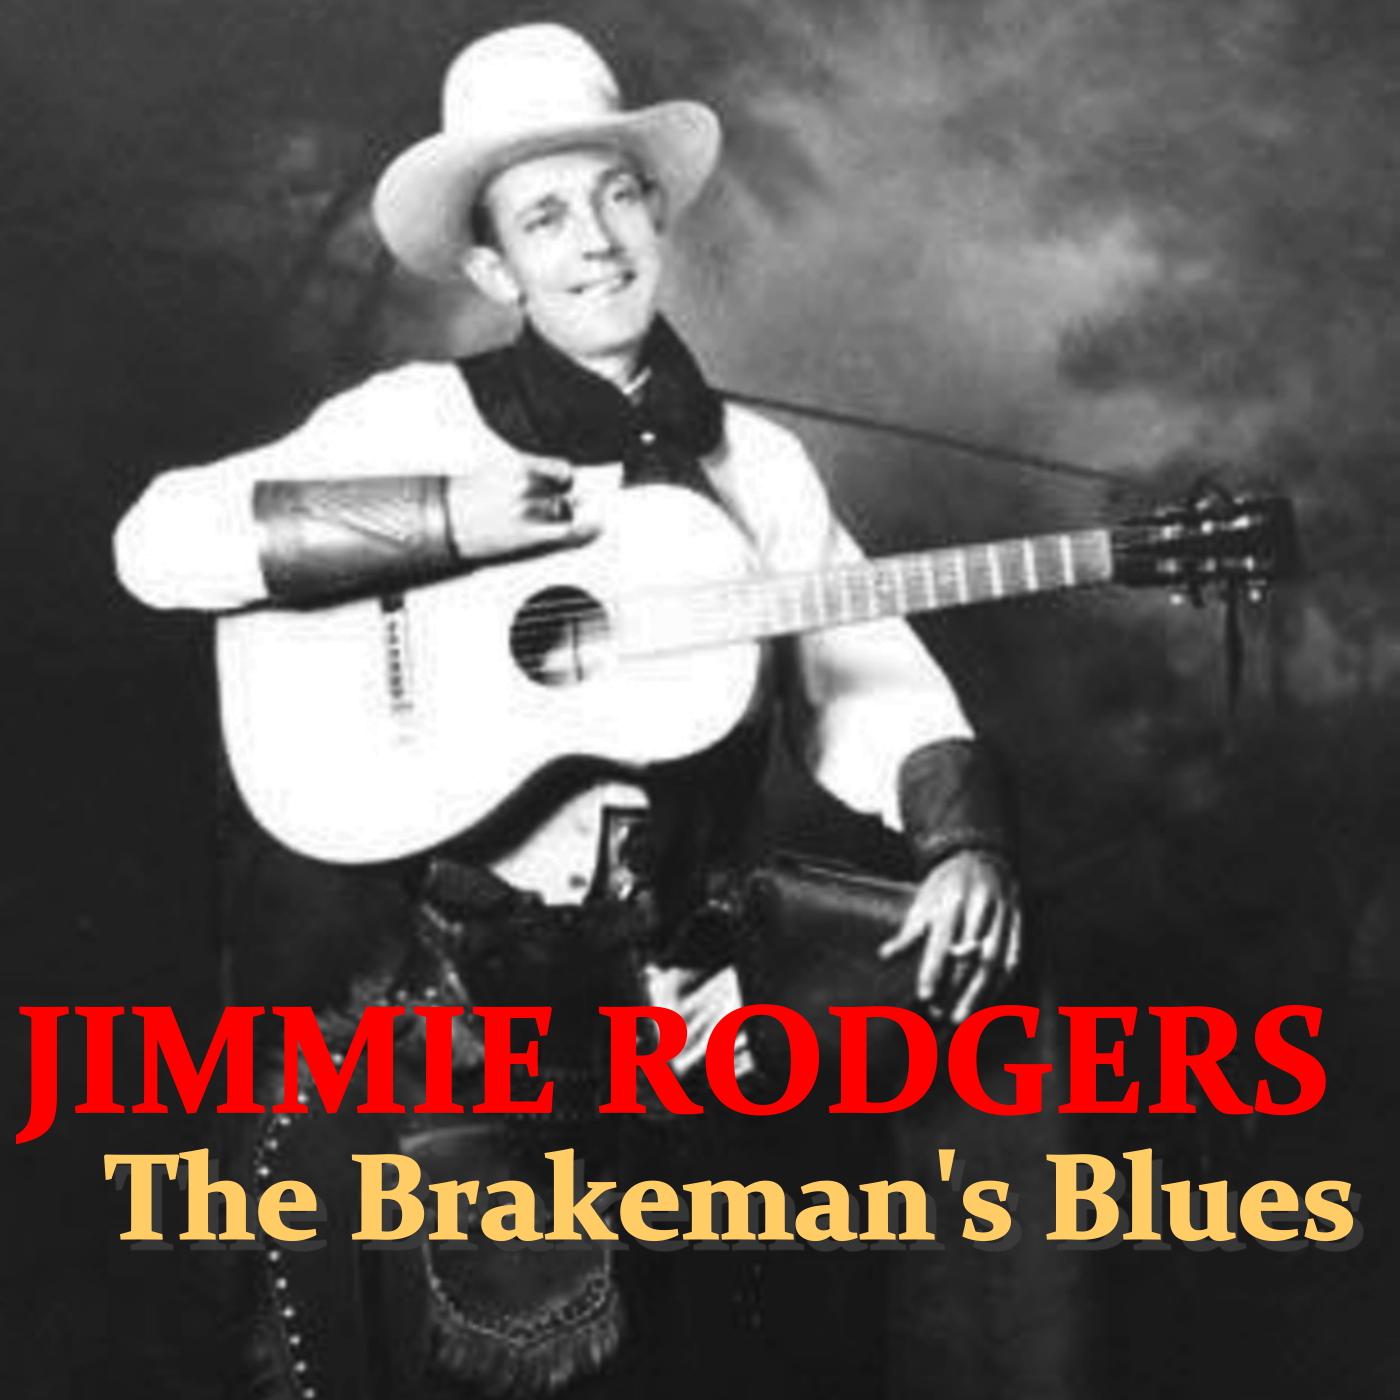 The Brakeman's Blues